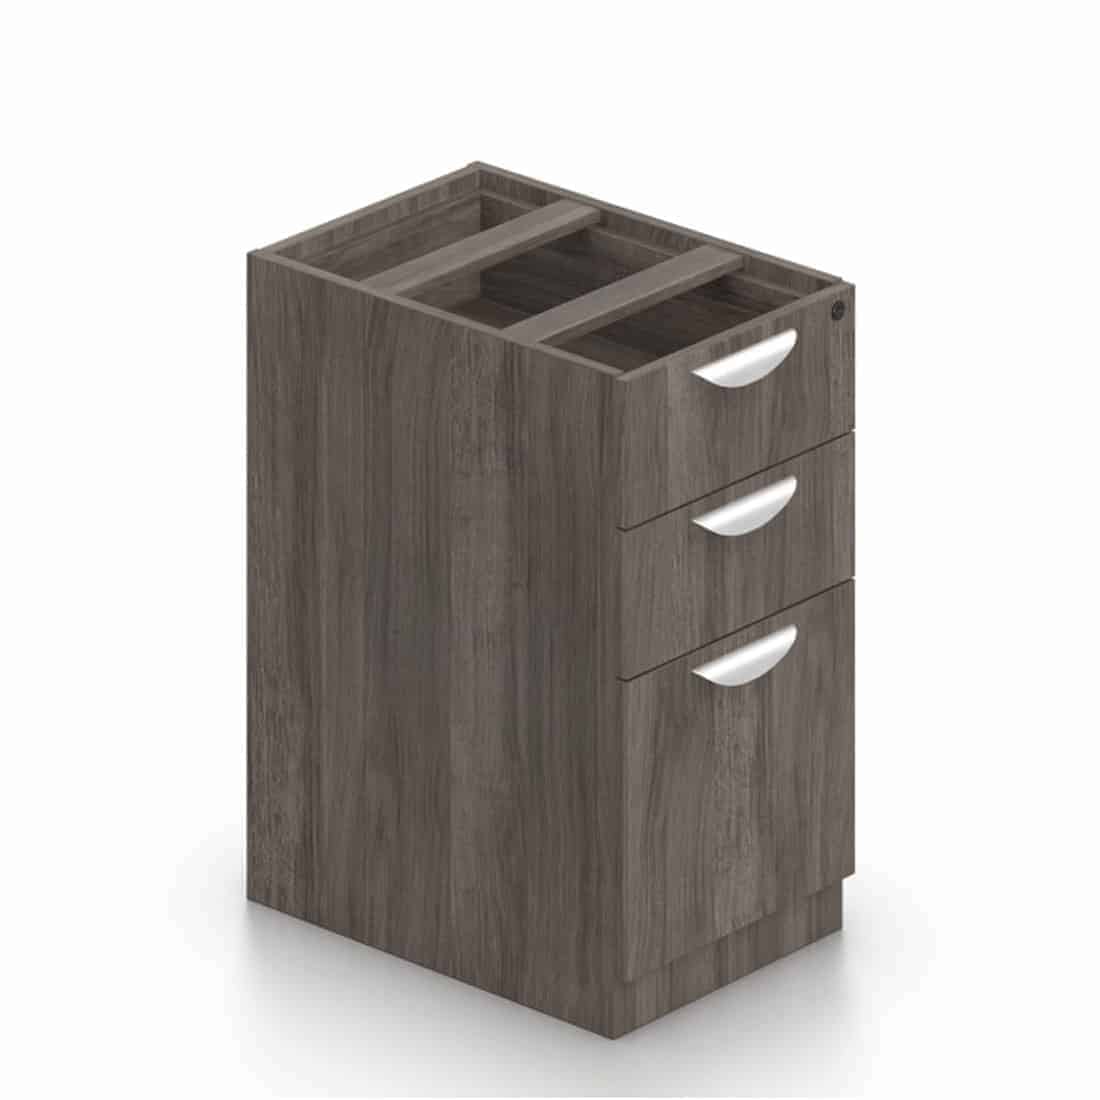 Padded storage pedestal Box/Box/File pedestal with cushion top